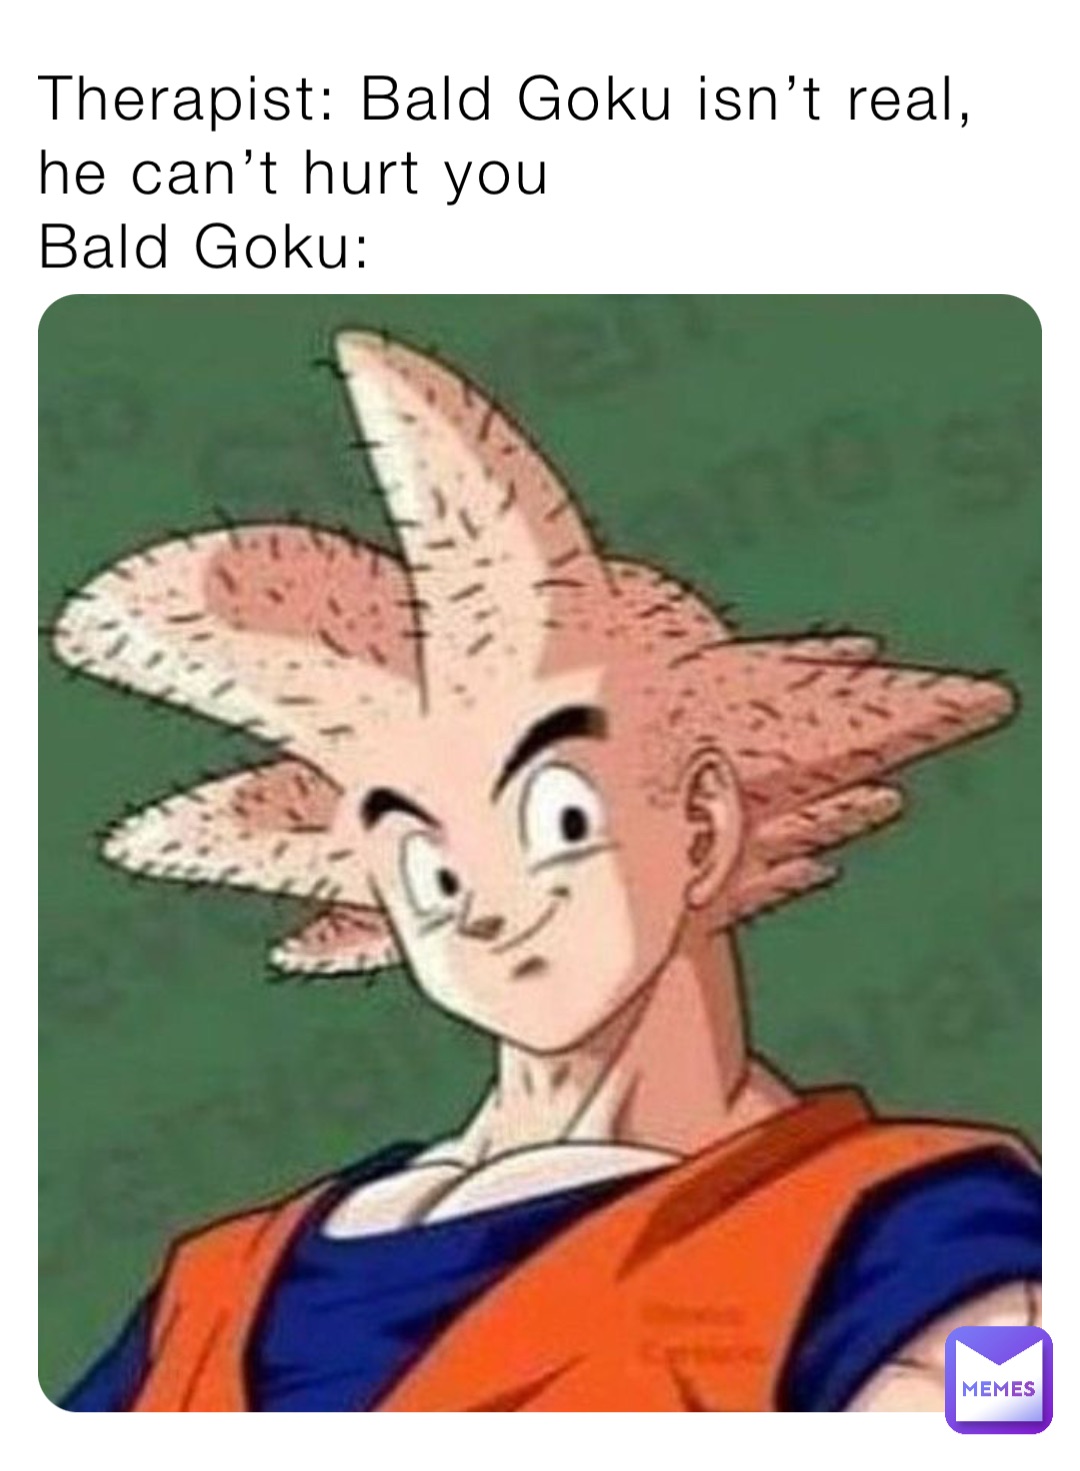 Therapist: Bald Goku isn’t real, he can’t hurt you
Bald Goku: